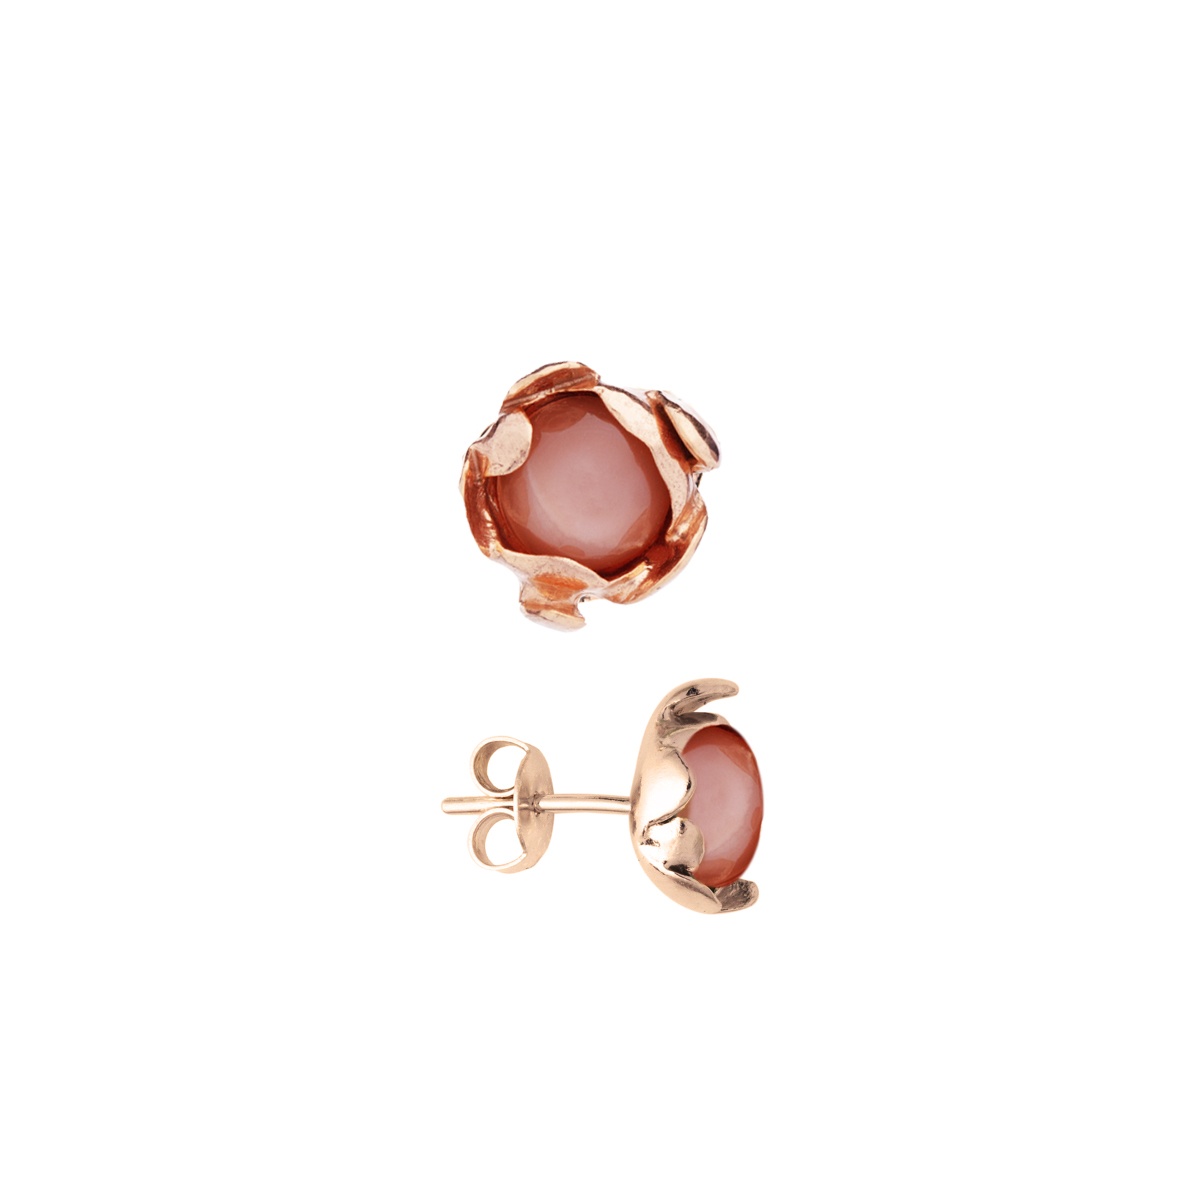 BLOSSOM stud earrings with peach moonstone